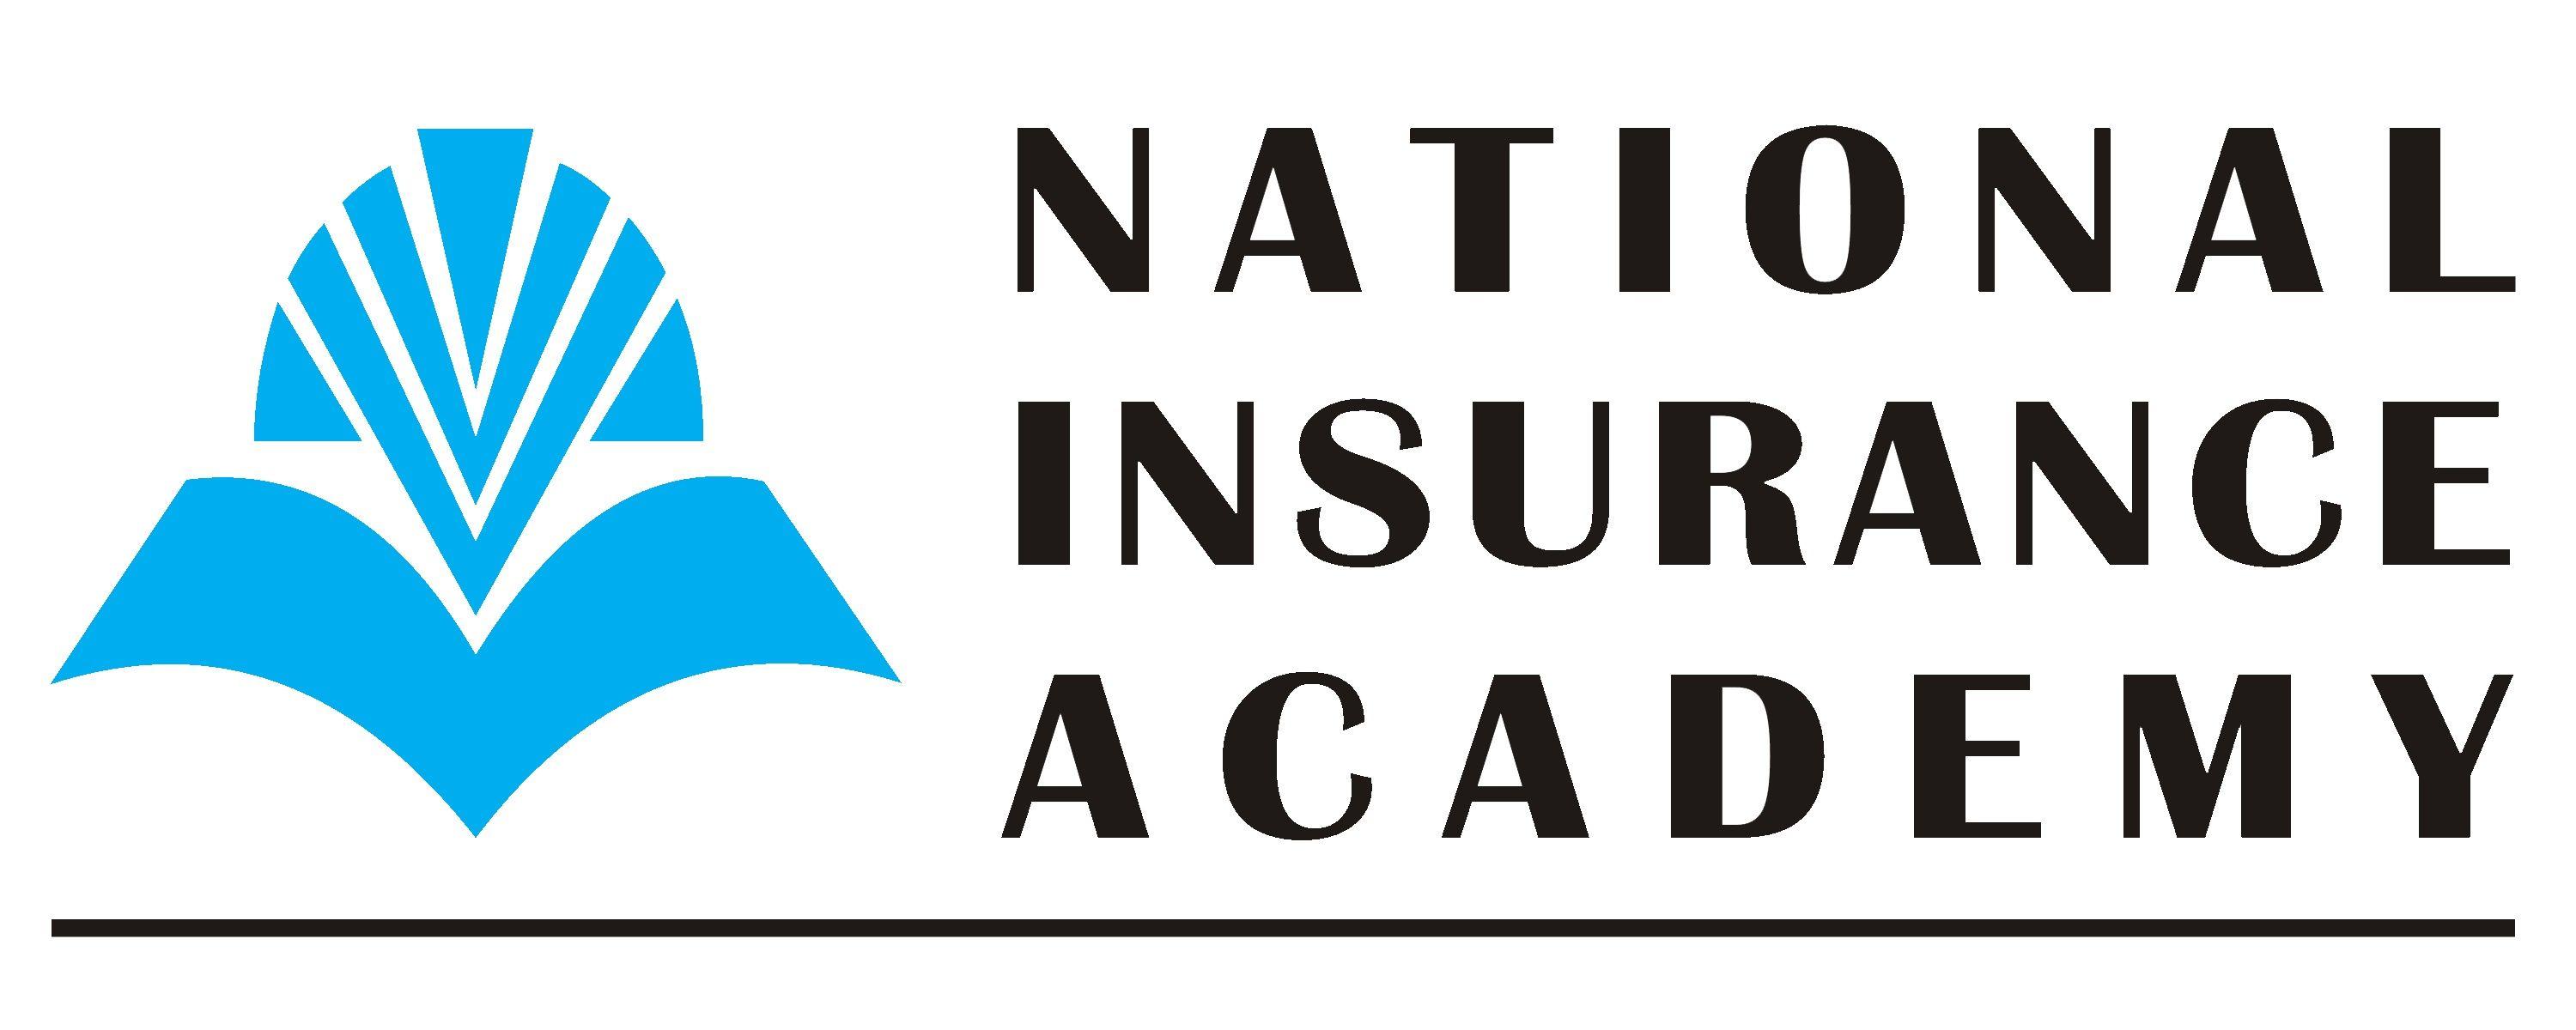 Rims.org Logo - University Directory: National Insurance Academy